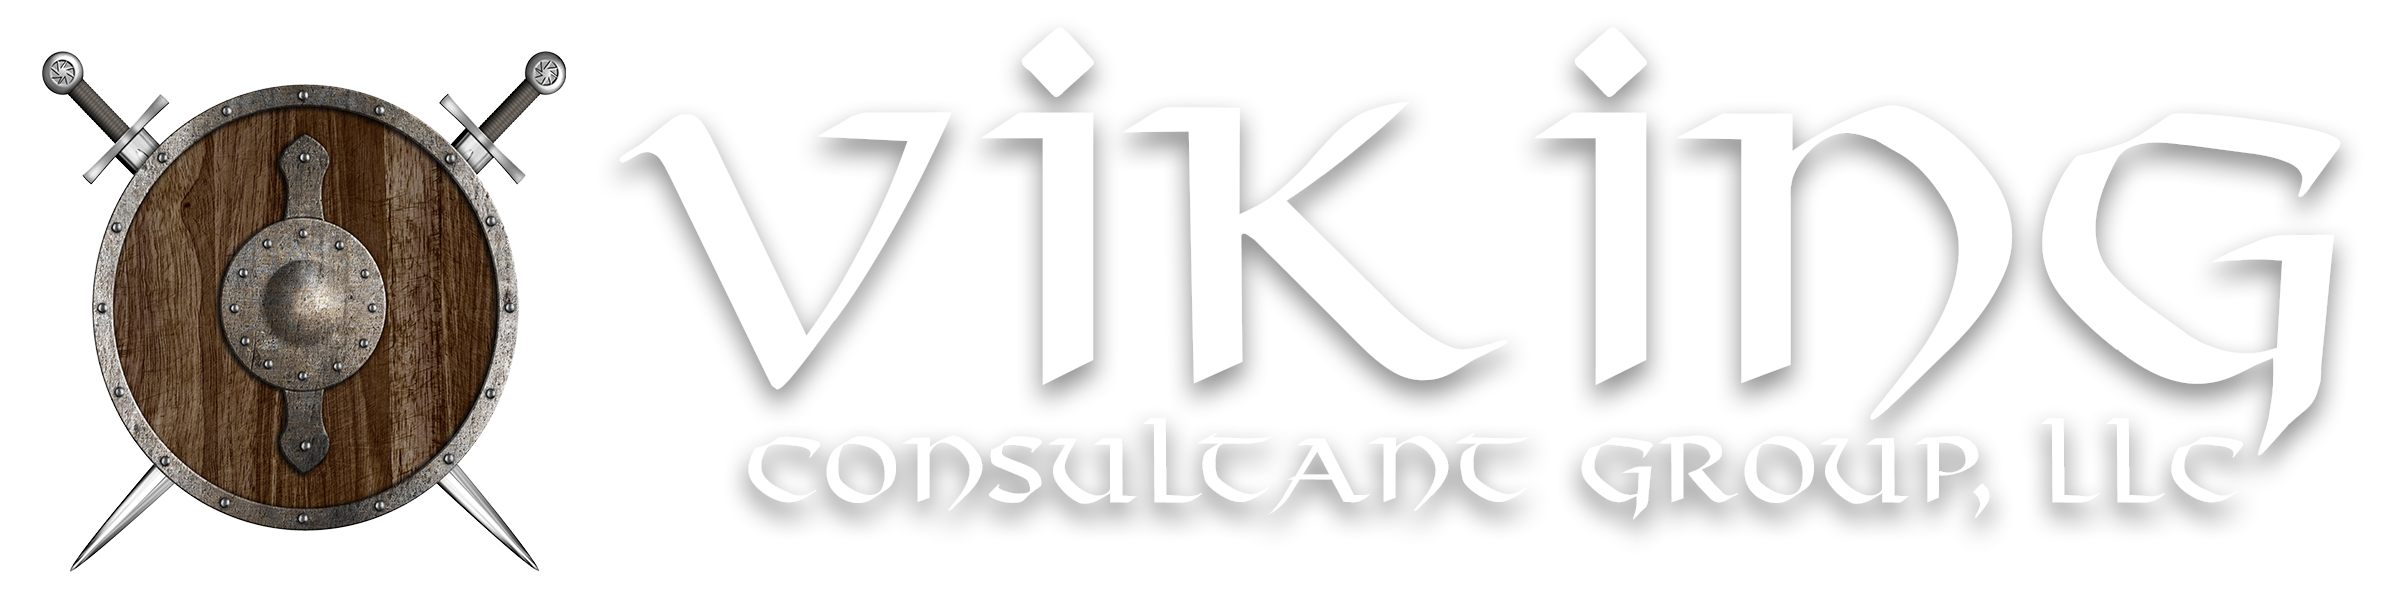 Viking Consultant Group, LLC